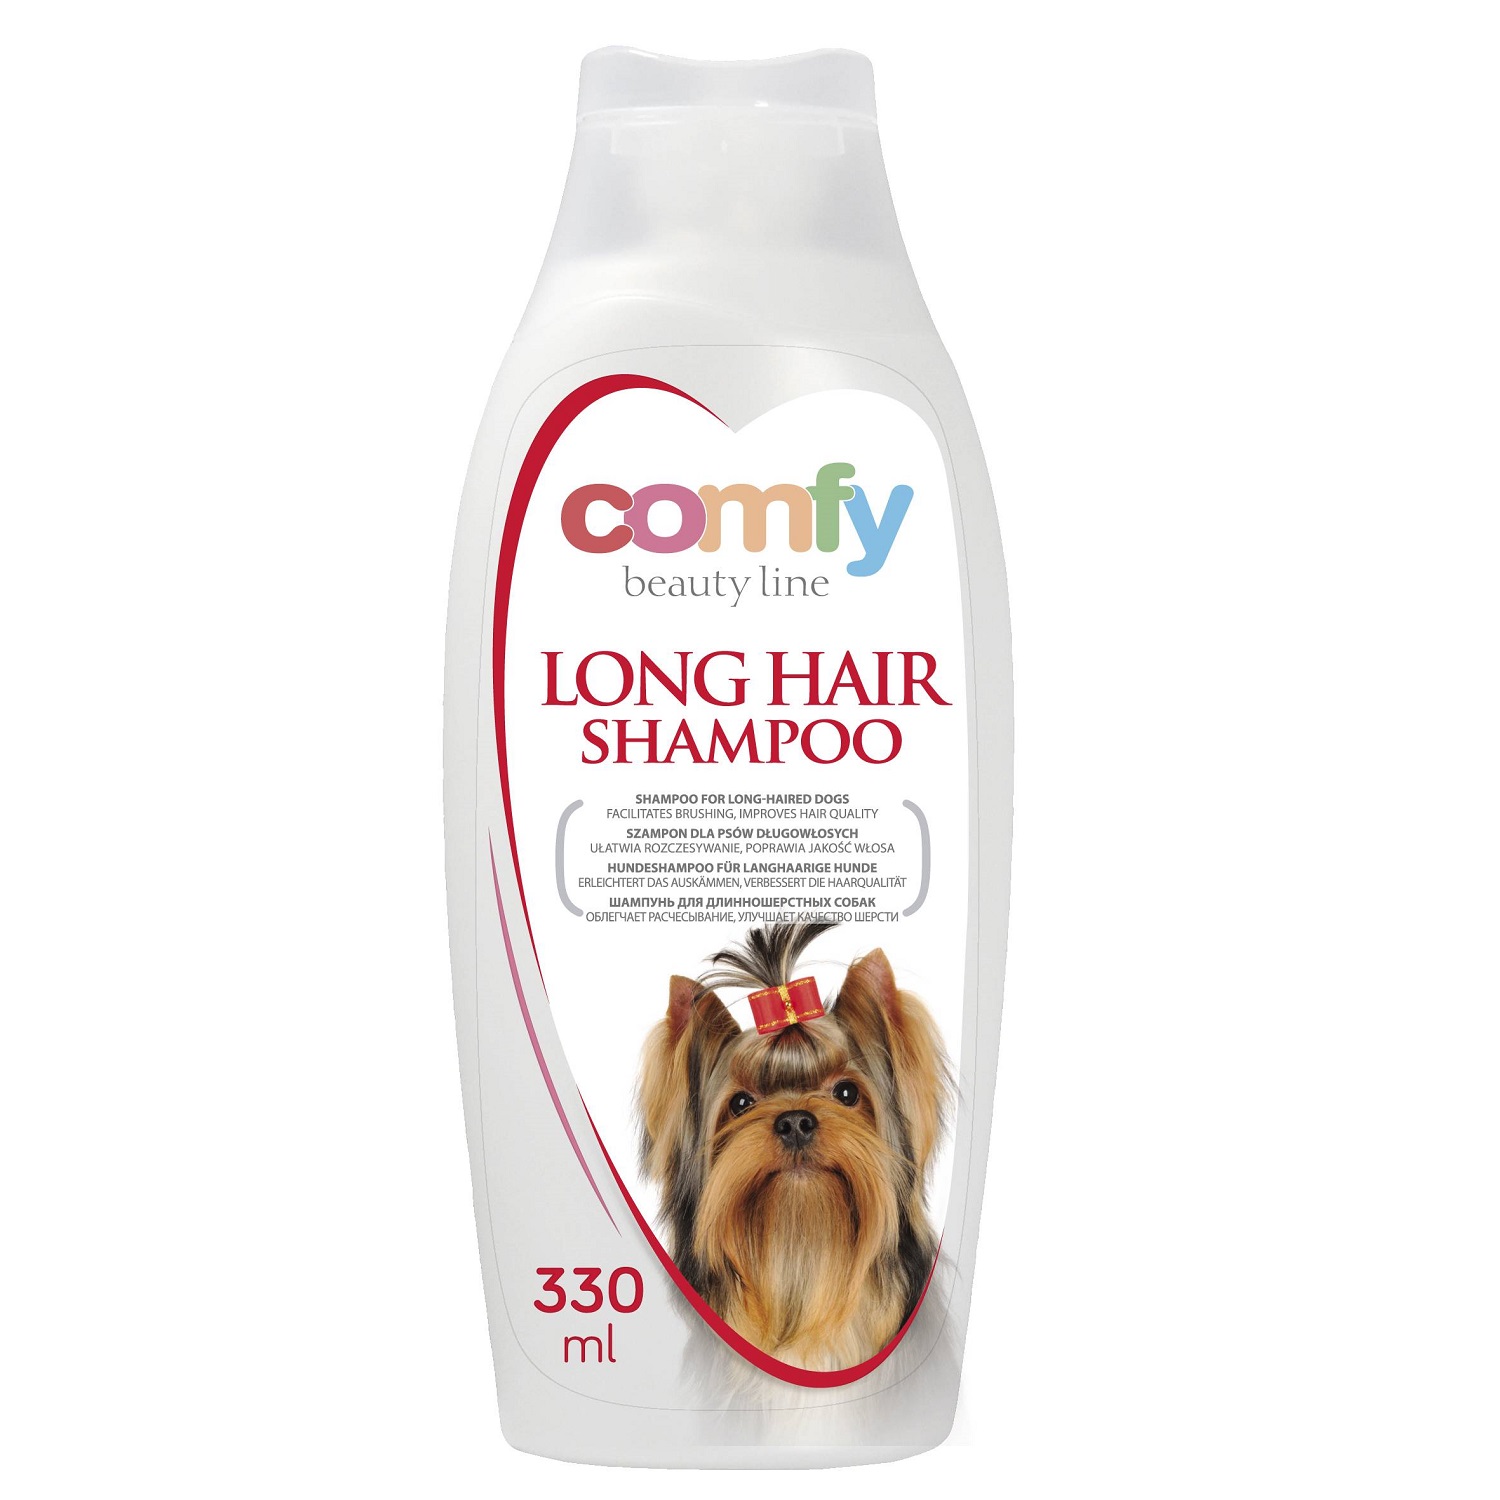 COMFY LONG HAIR shampoo visual